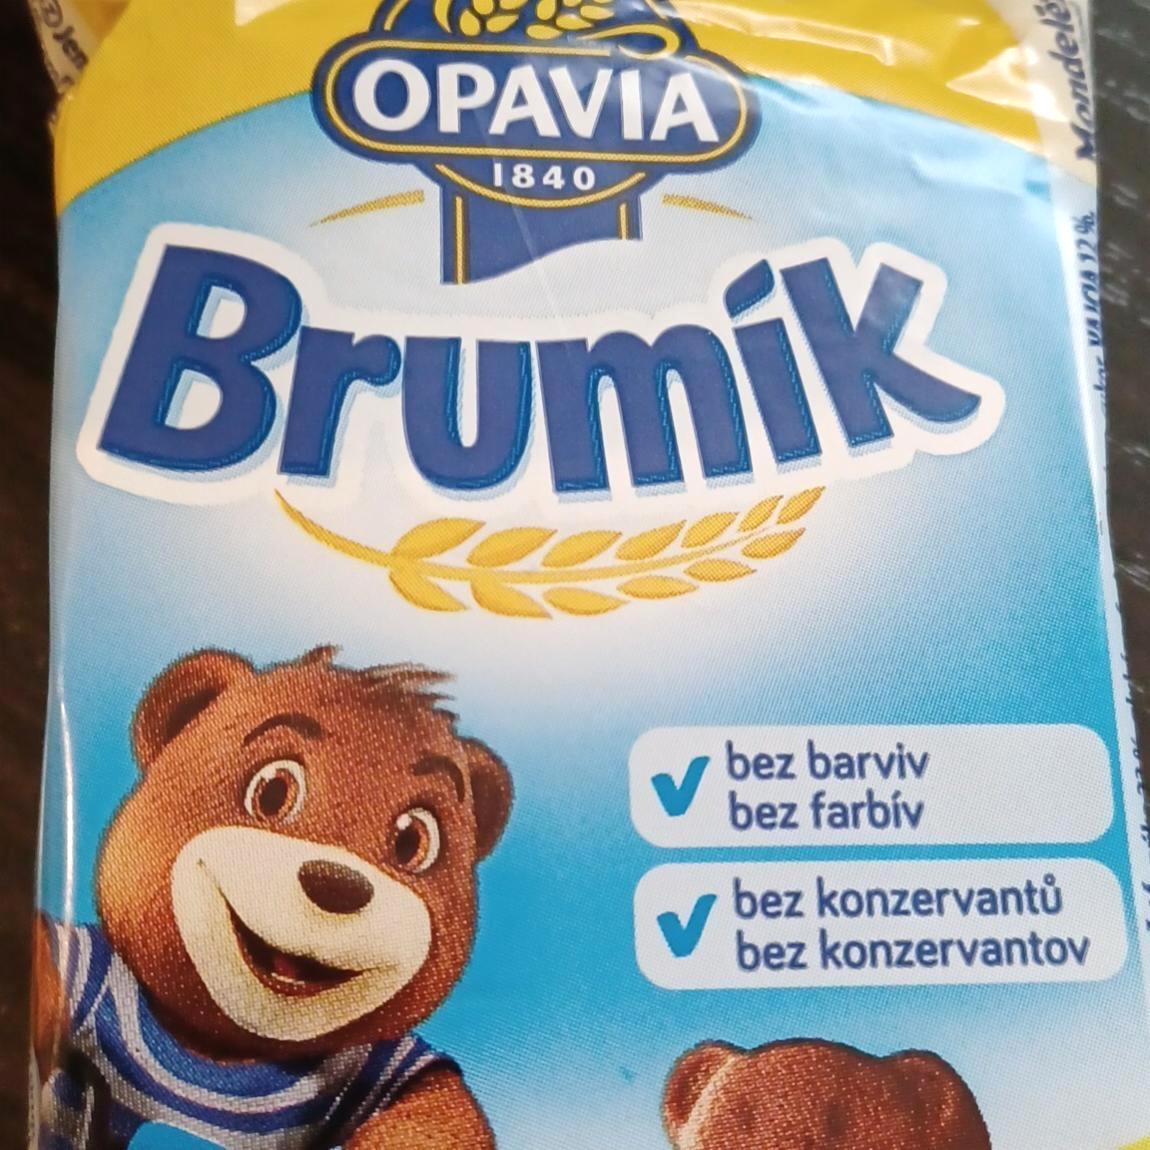 Képek - Brumík Opavia